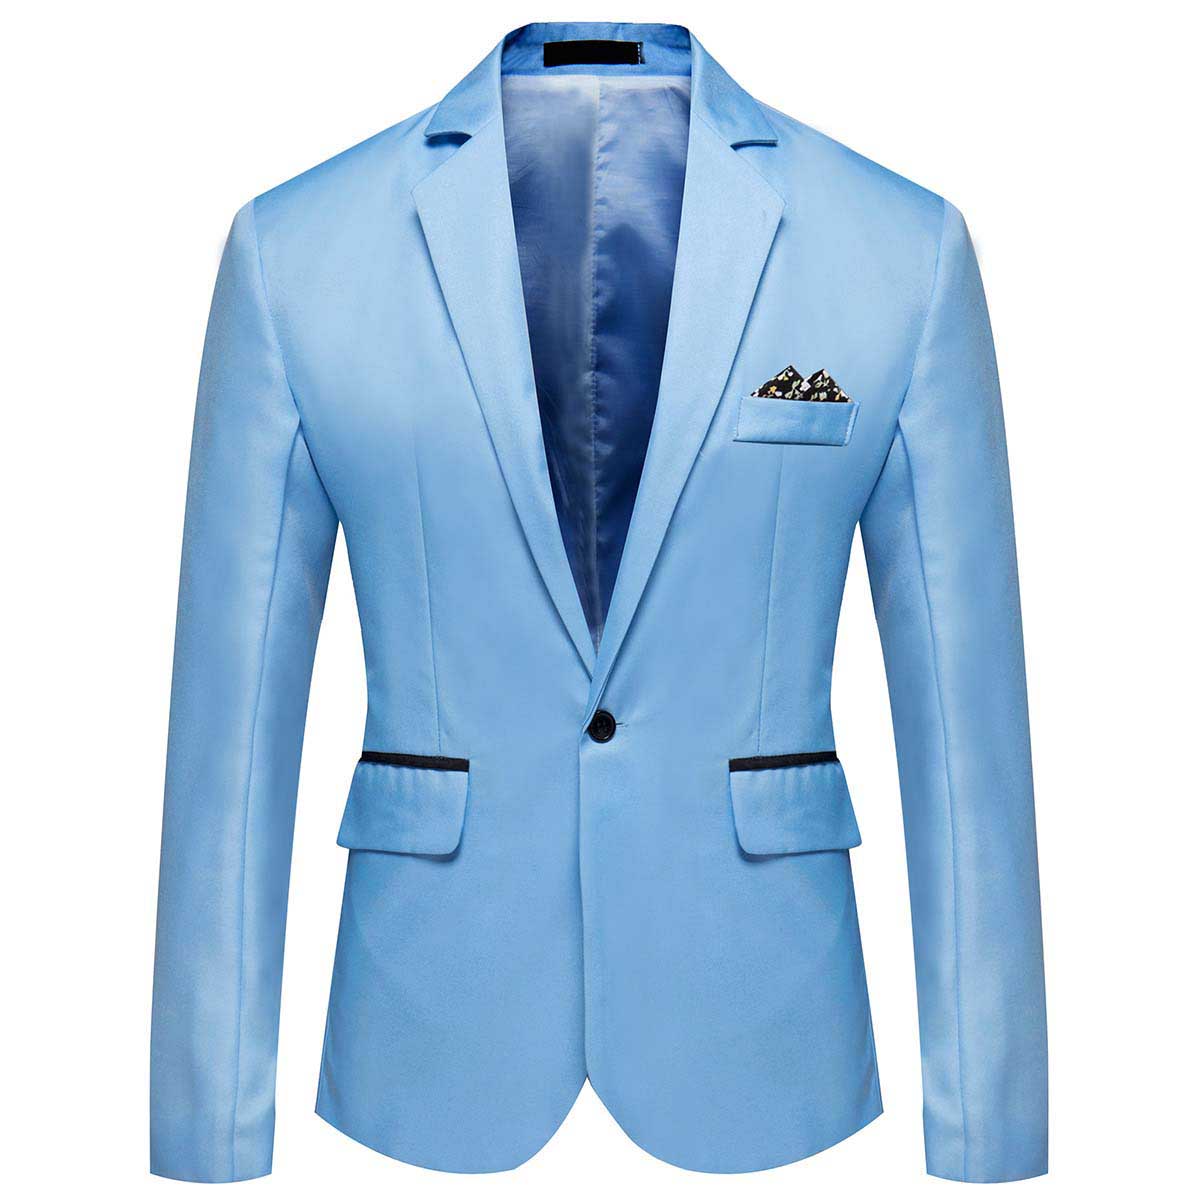 Men's Casual Suit Jacket Slim Fit Lightweight Blazer Coat Light Blue